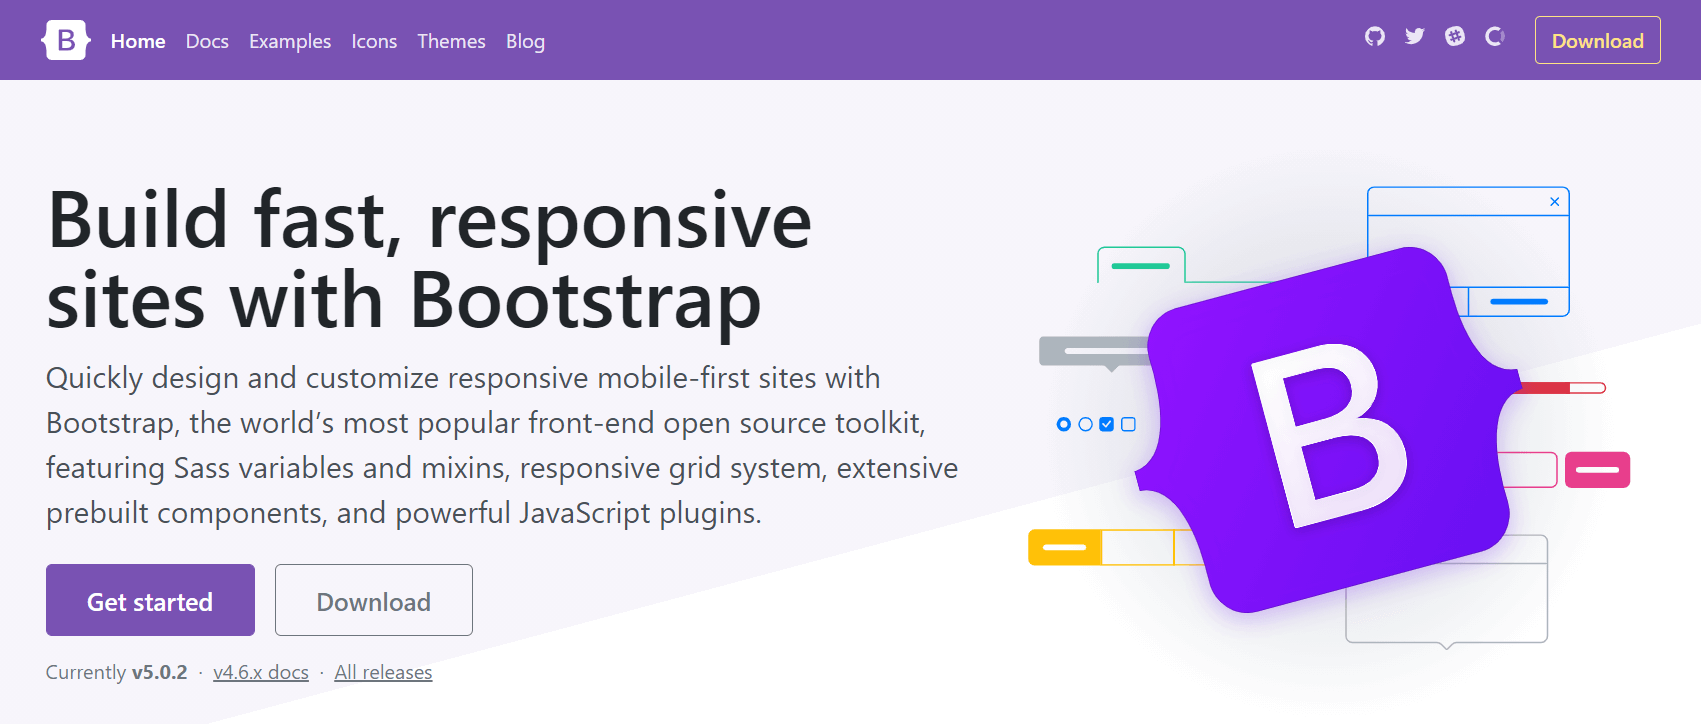 Bootstrap web development tool for designing responsive website